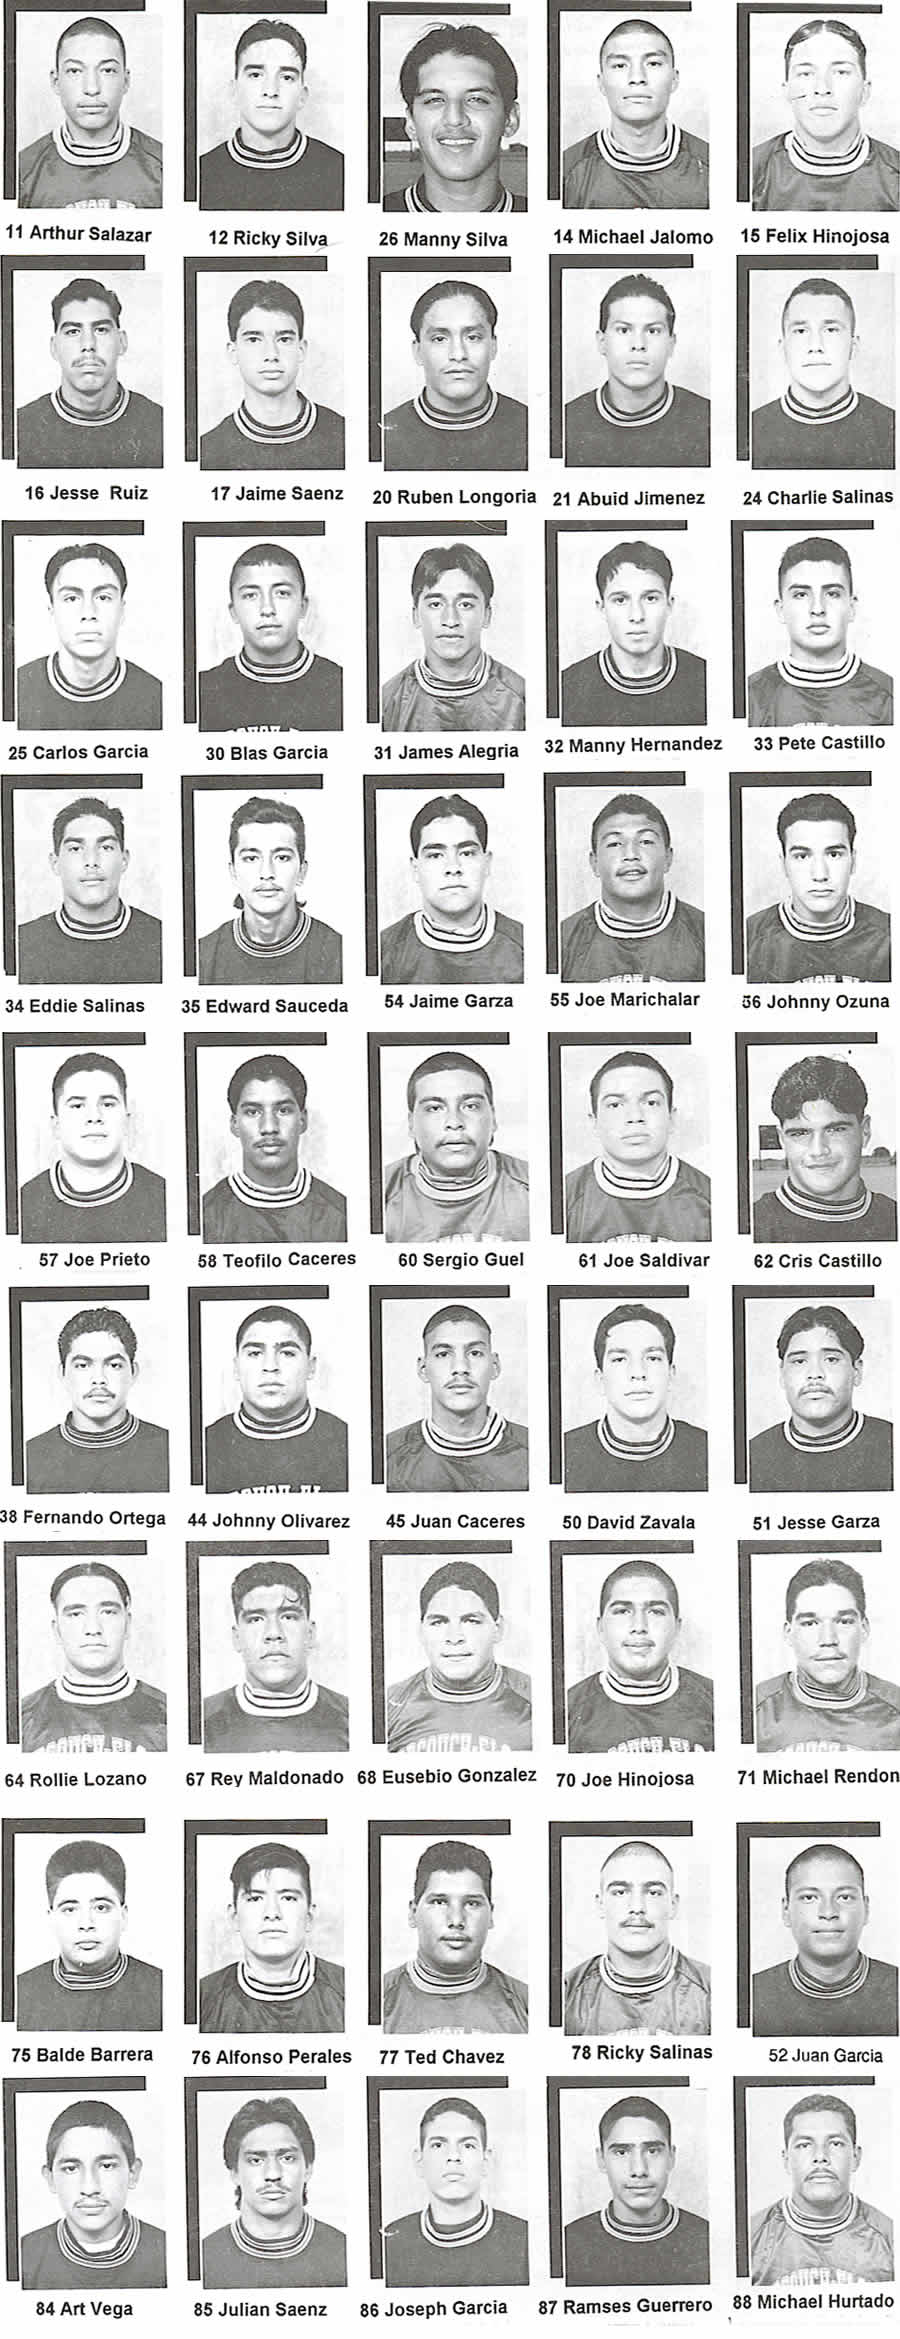 1995 team profiles